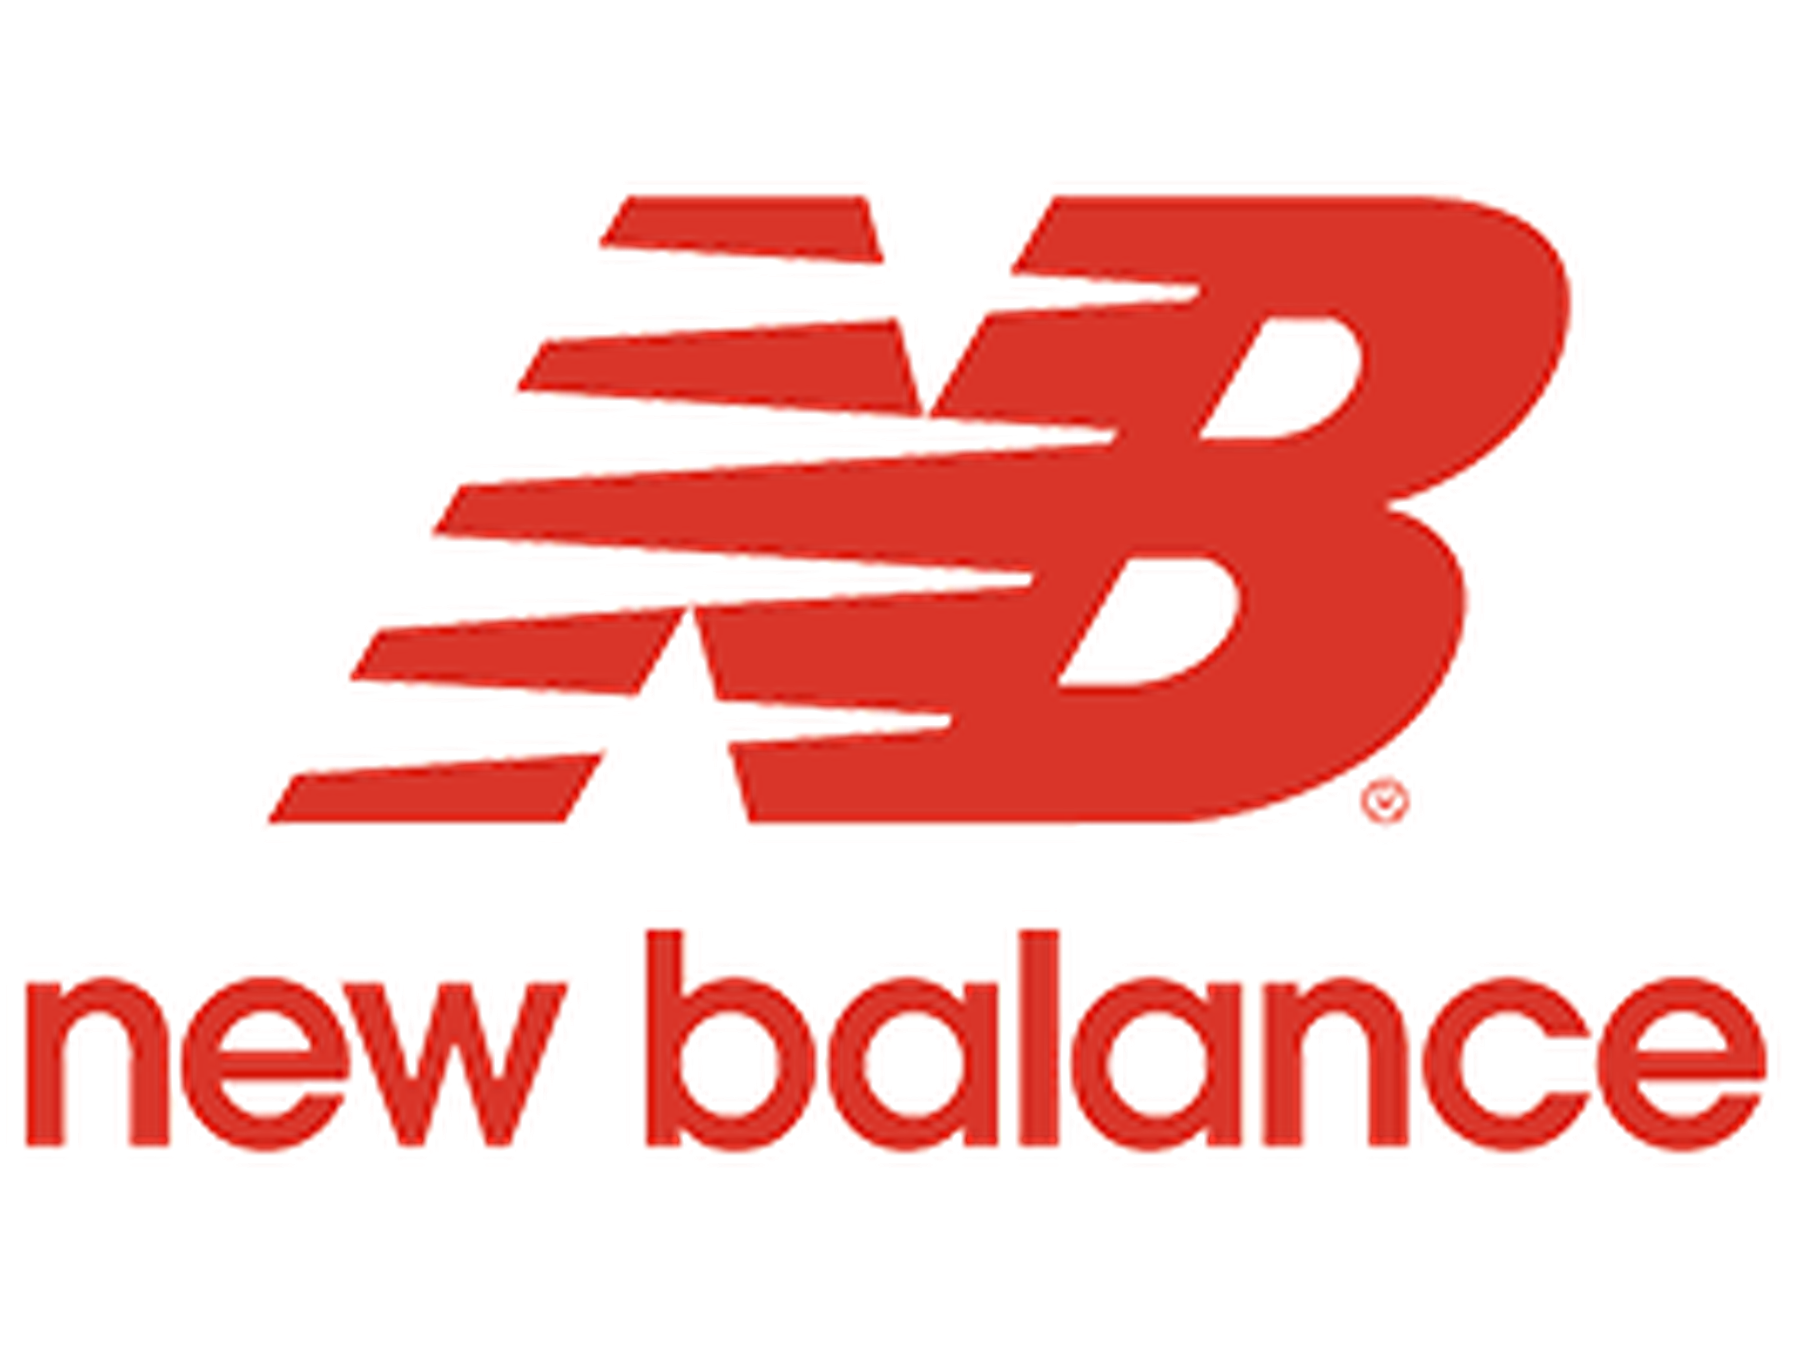 New Balance